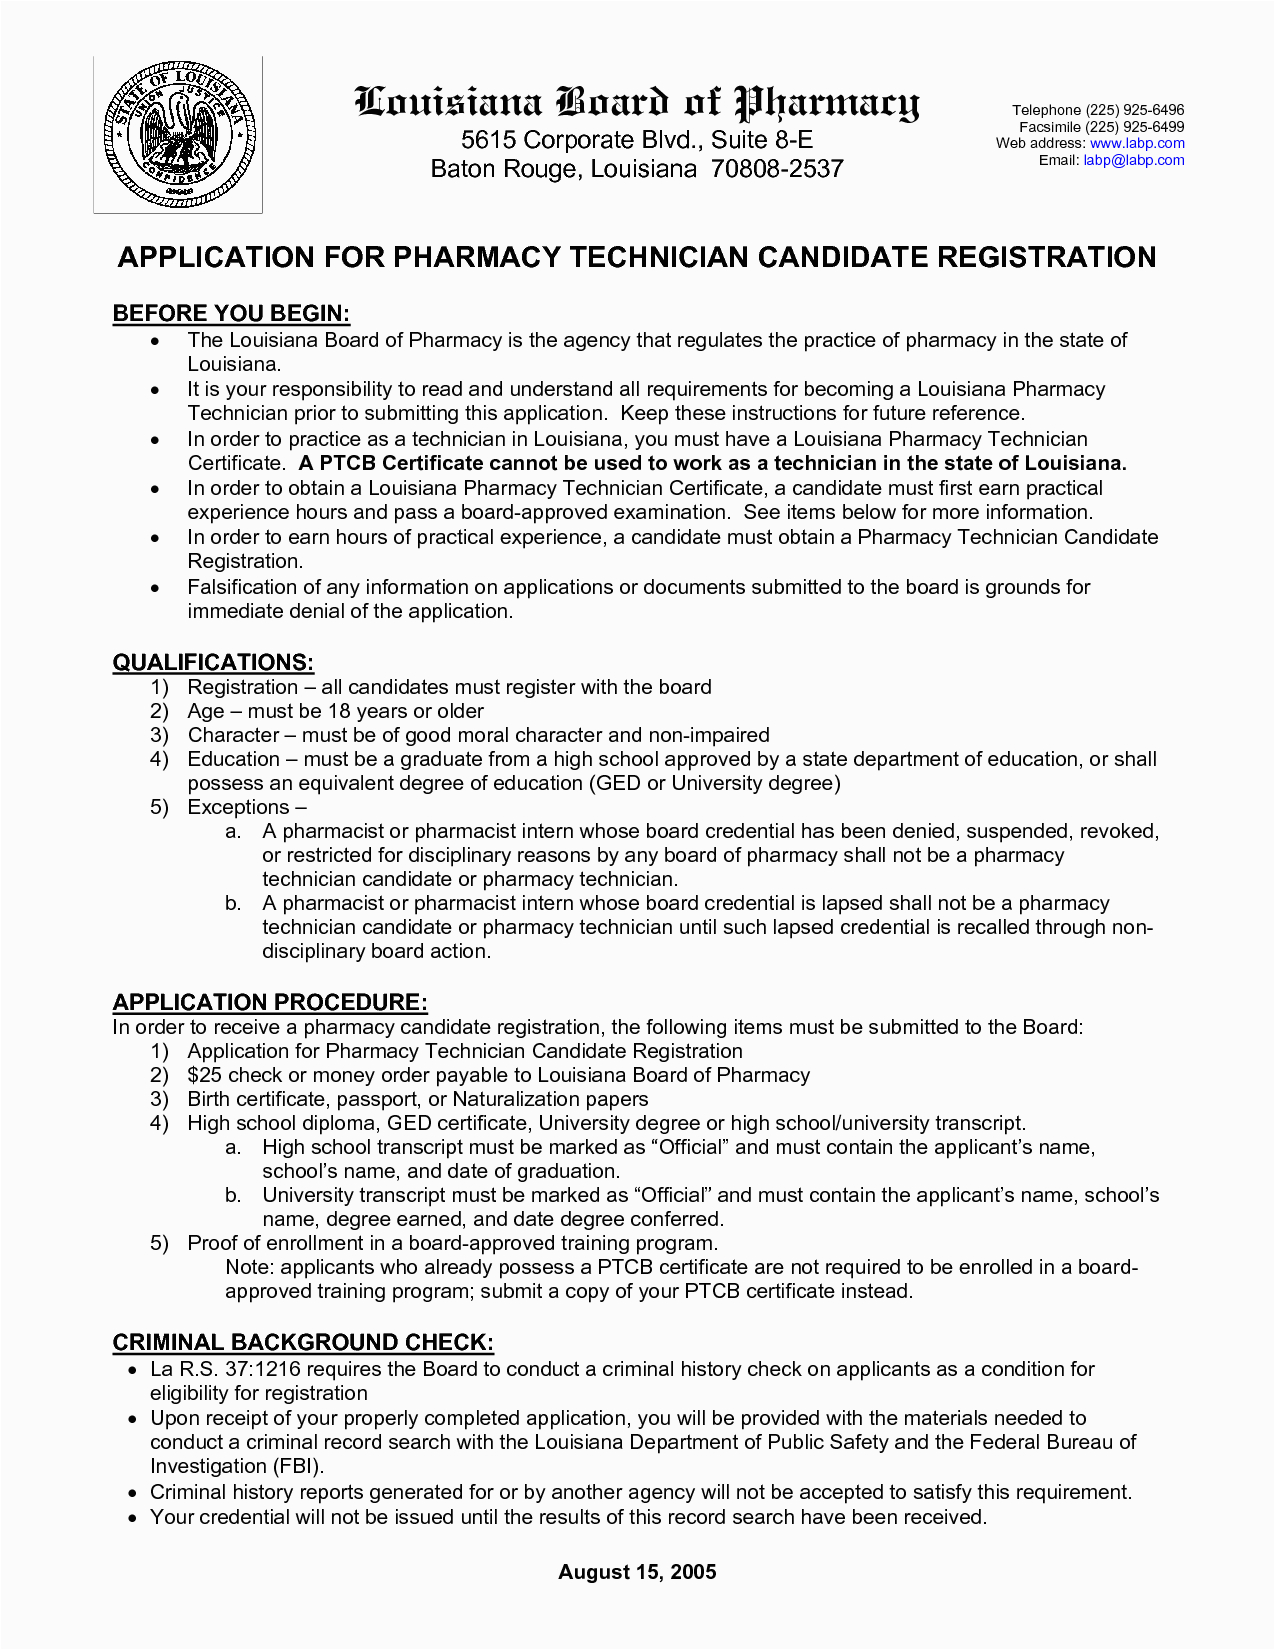 Sample Resume for Pharmacist In India Pharmacist Curriculum Vitae Template Karoosha